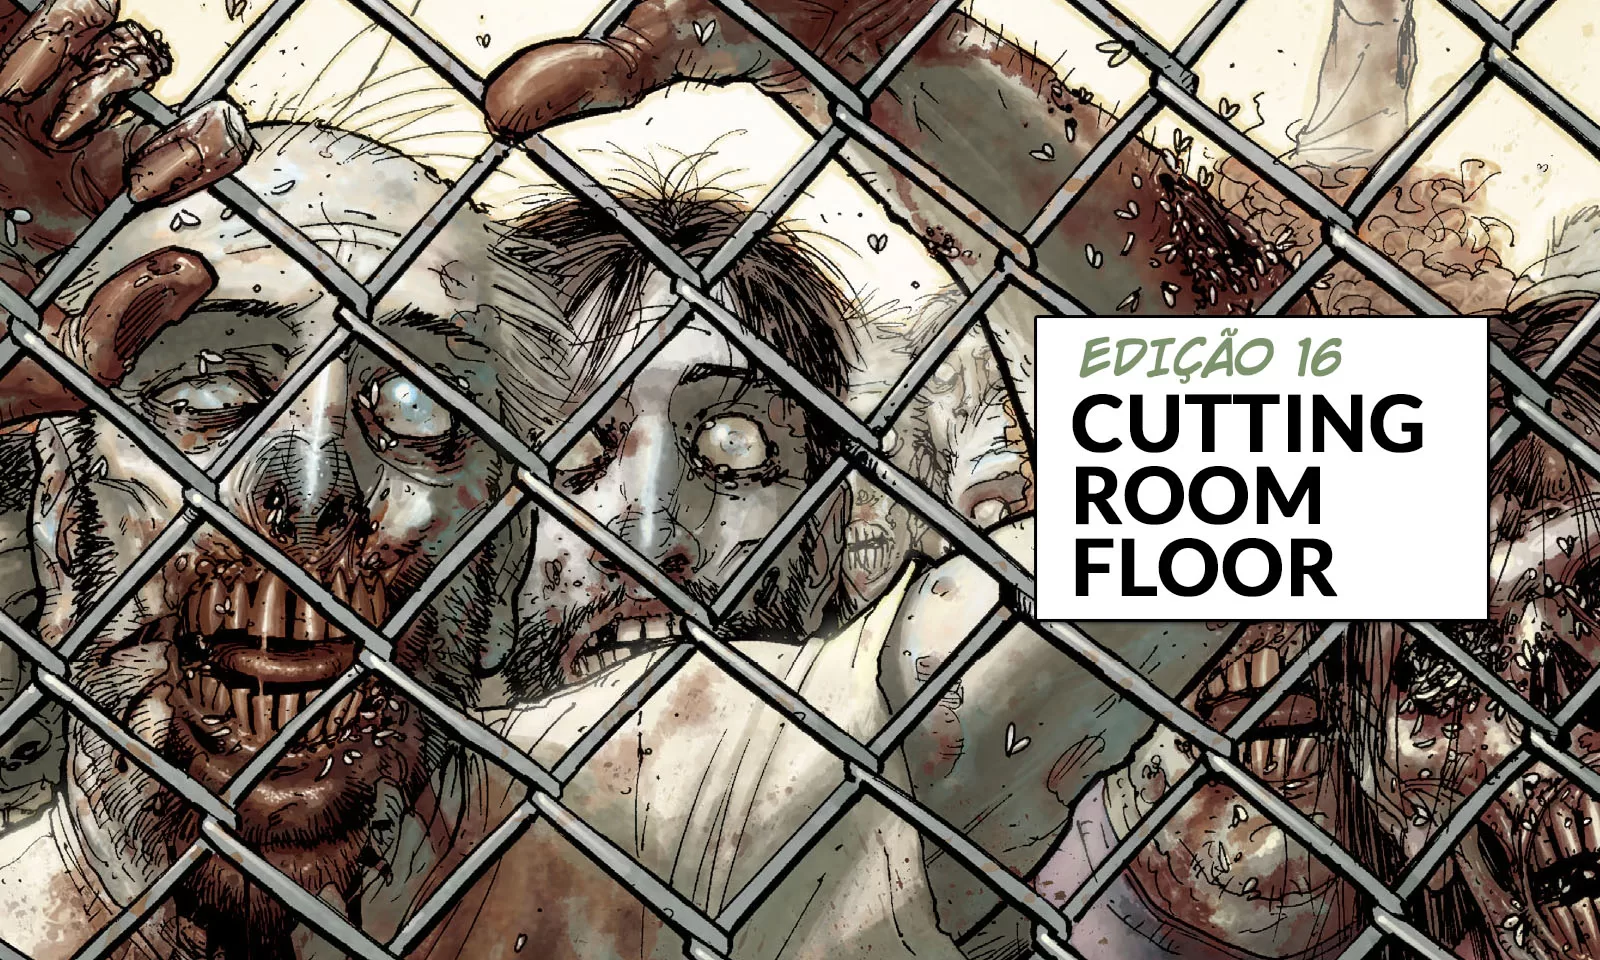 Arte com imagem da capa da The Walking Dead Deluxe 16 para o Cutting Room Floor.